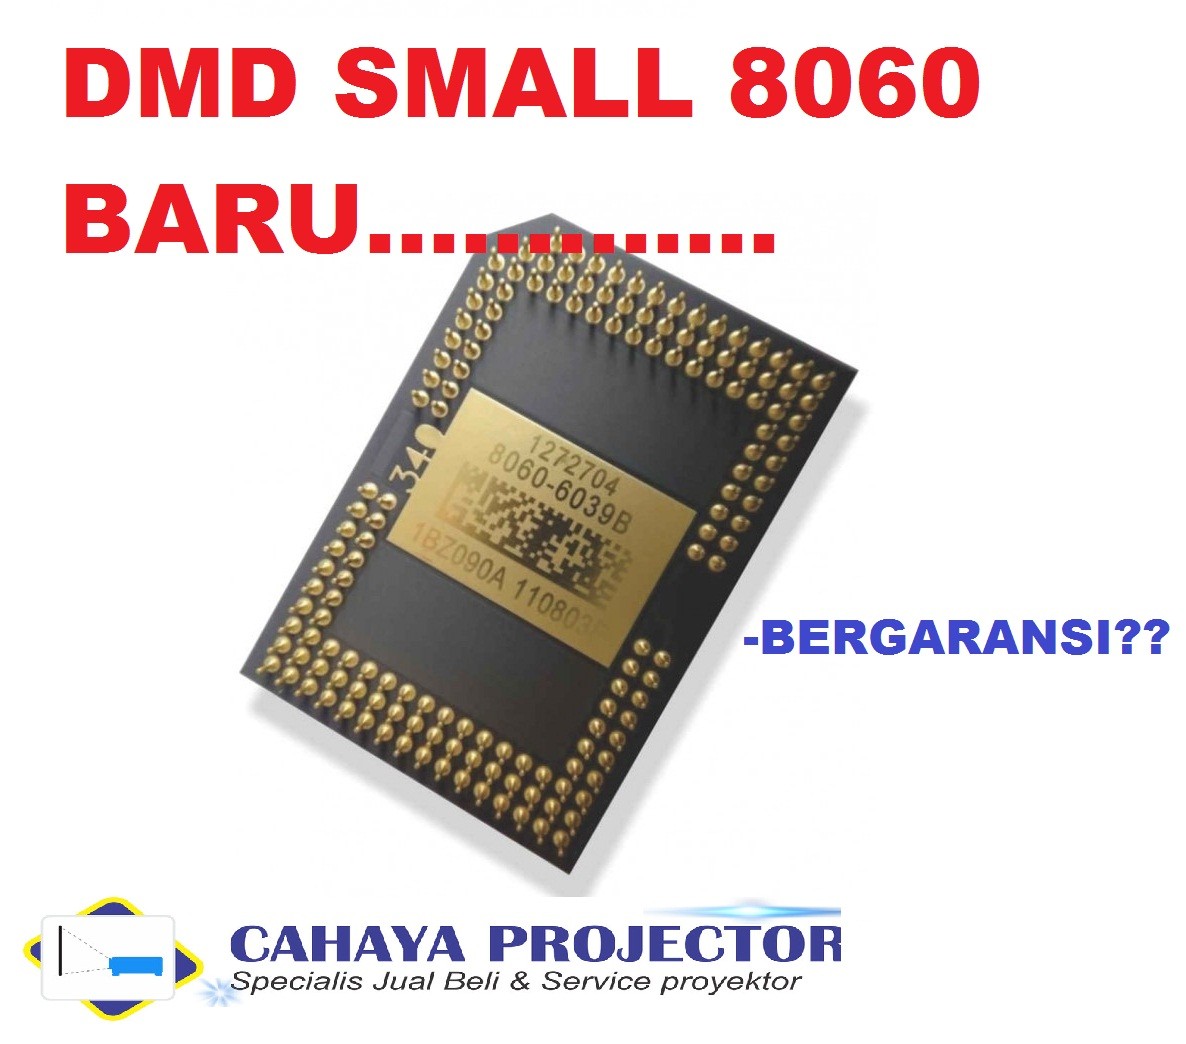 Cahaya Projector dmd-chip-dlp-projetor-benq-ms510-mp615p-compativeis-D_NQ_NP_731754-MLB26840090046_022018-F home    